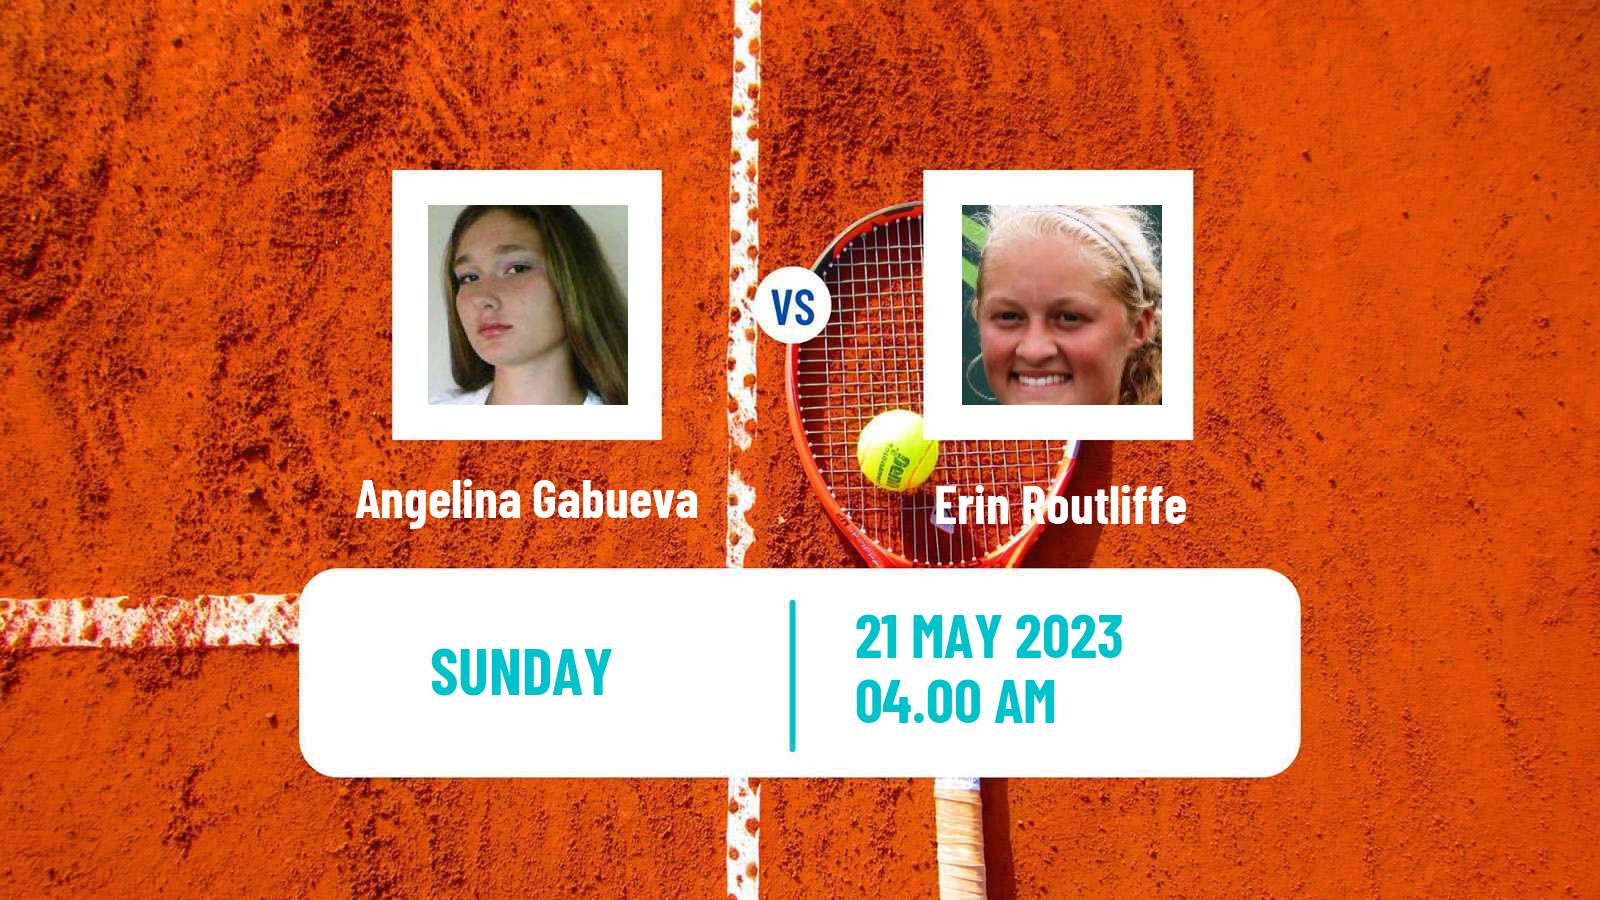 Tennis WTA Strasbourg Angelina Gabueva - Erin Routliffe